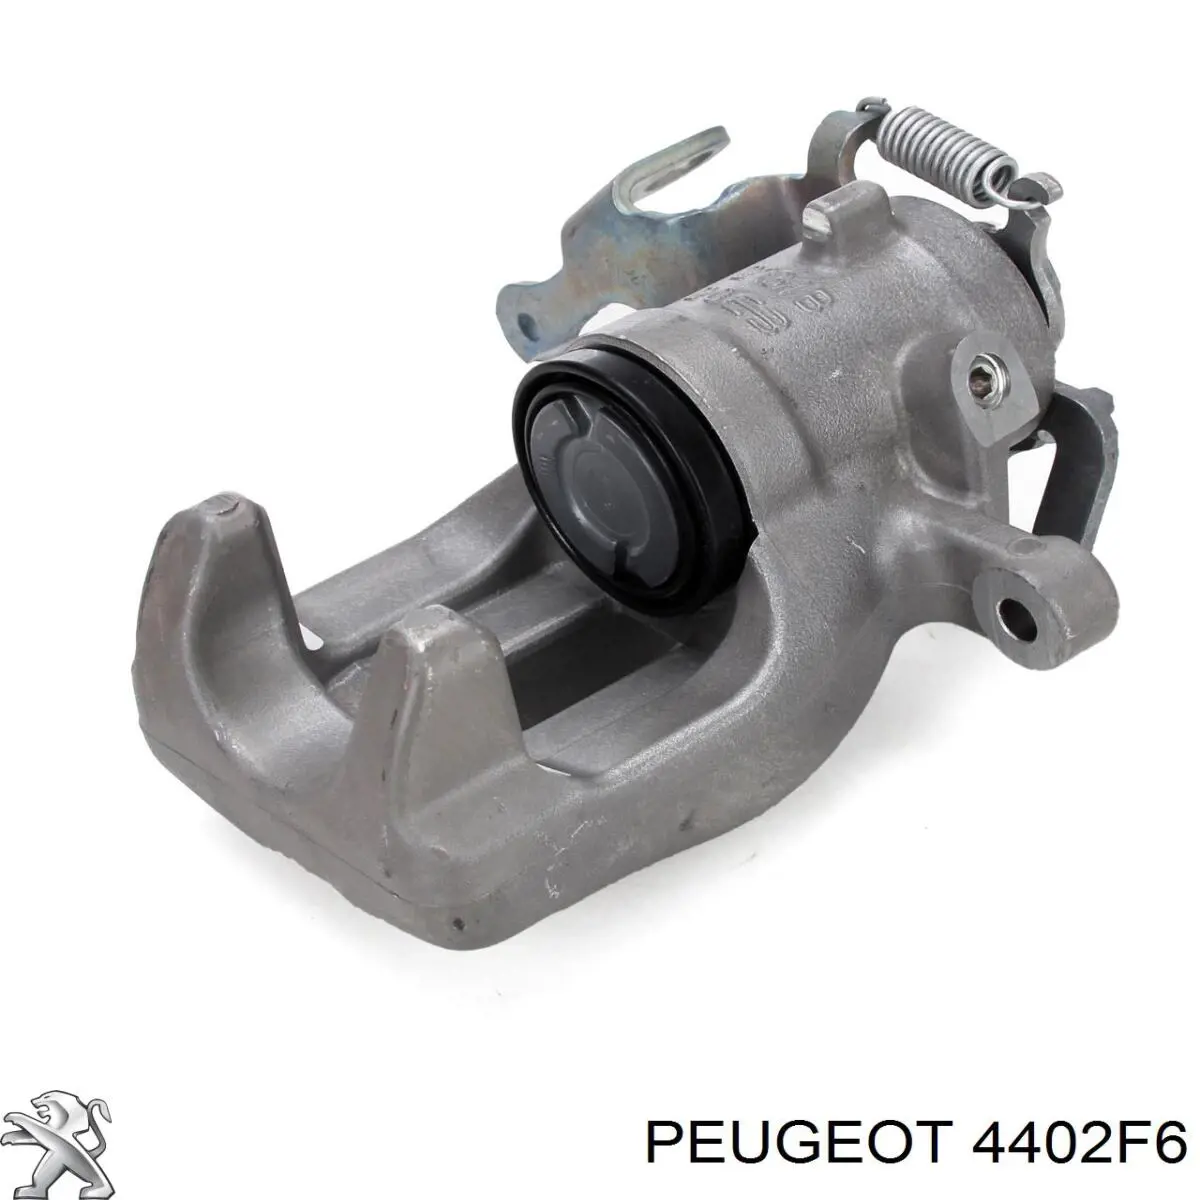 4402F6 Peugeot/Citroen pinza de freno trasero derecho